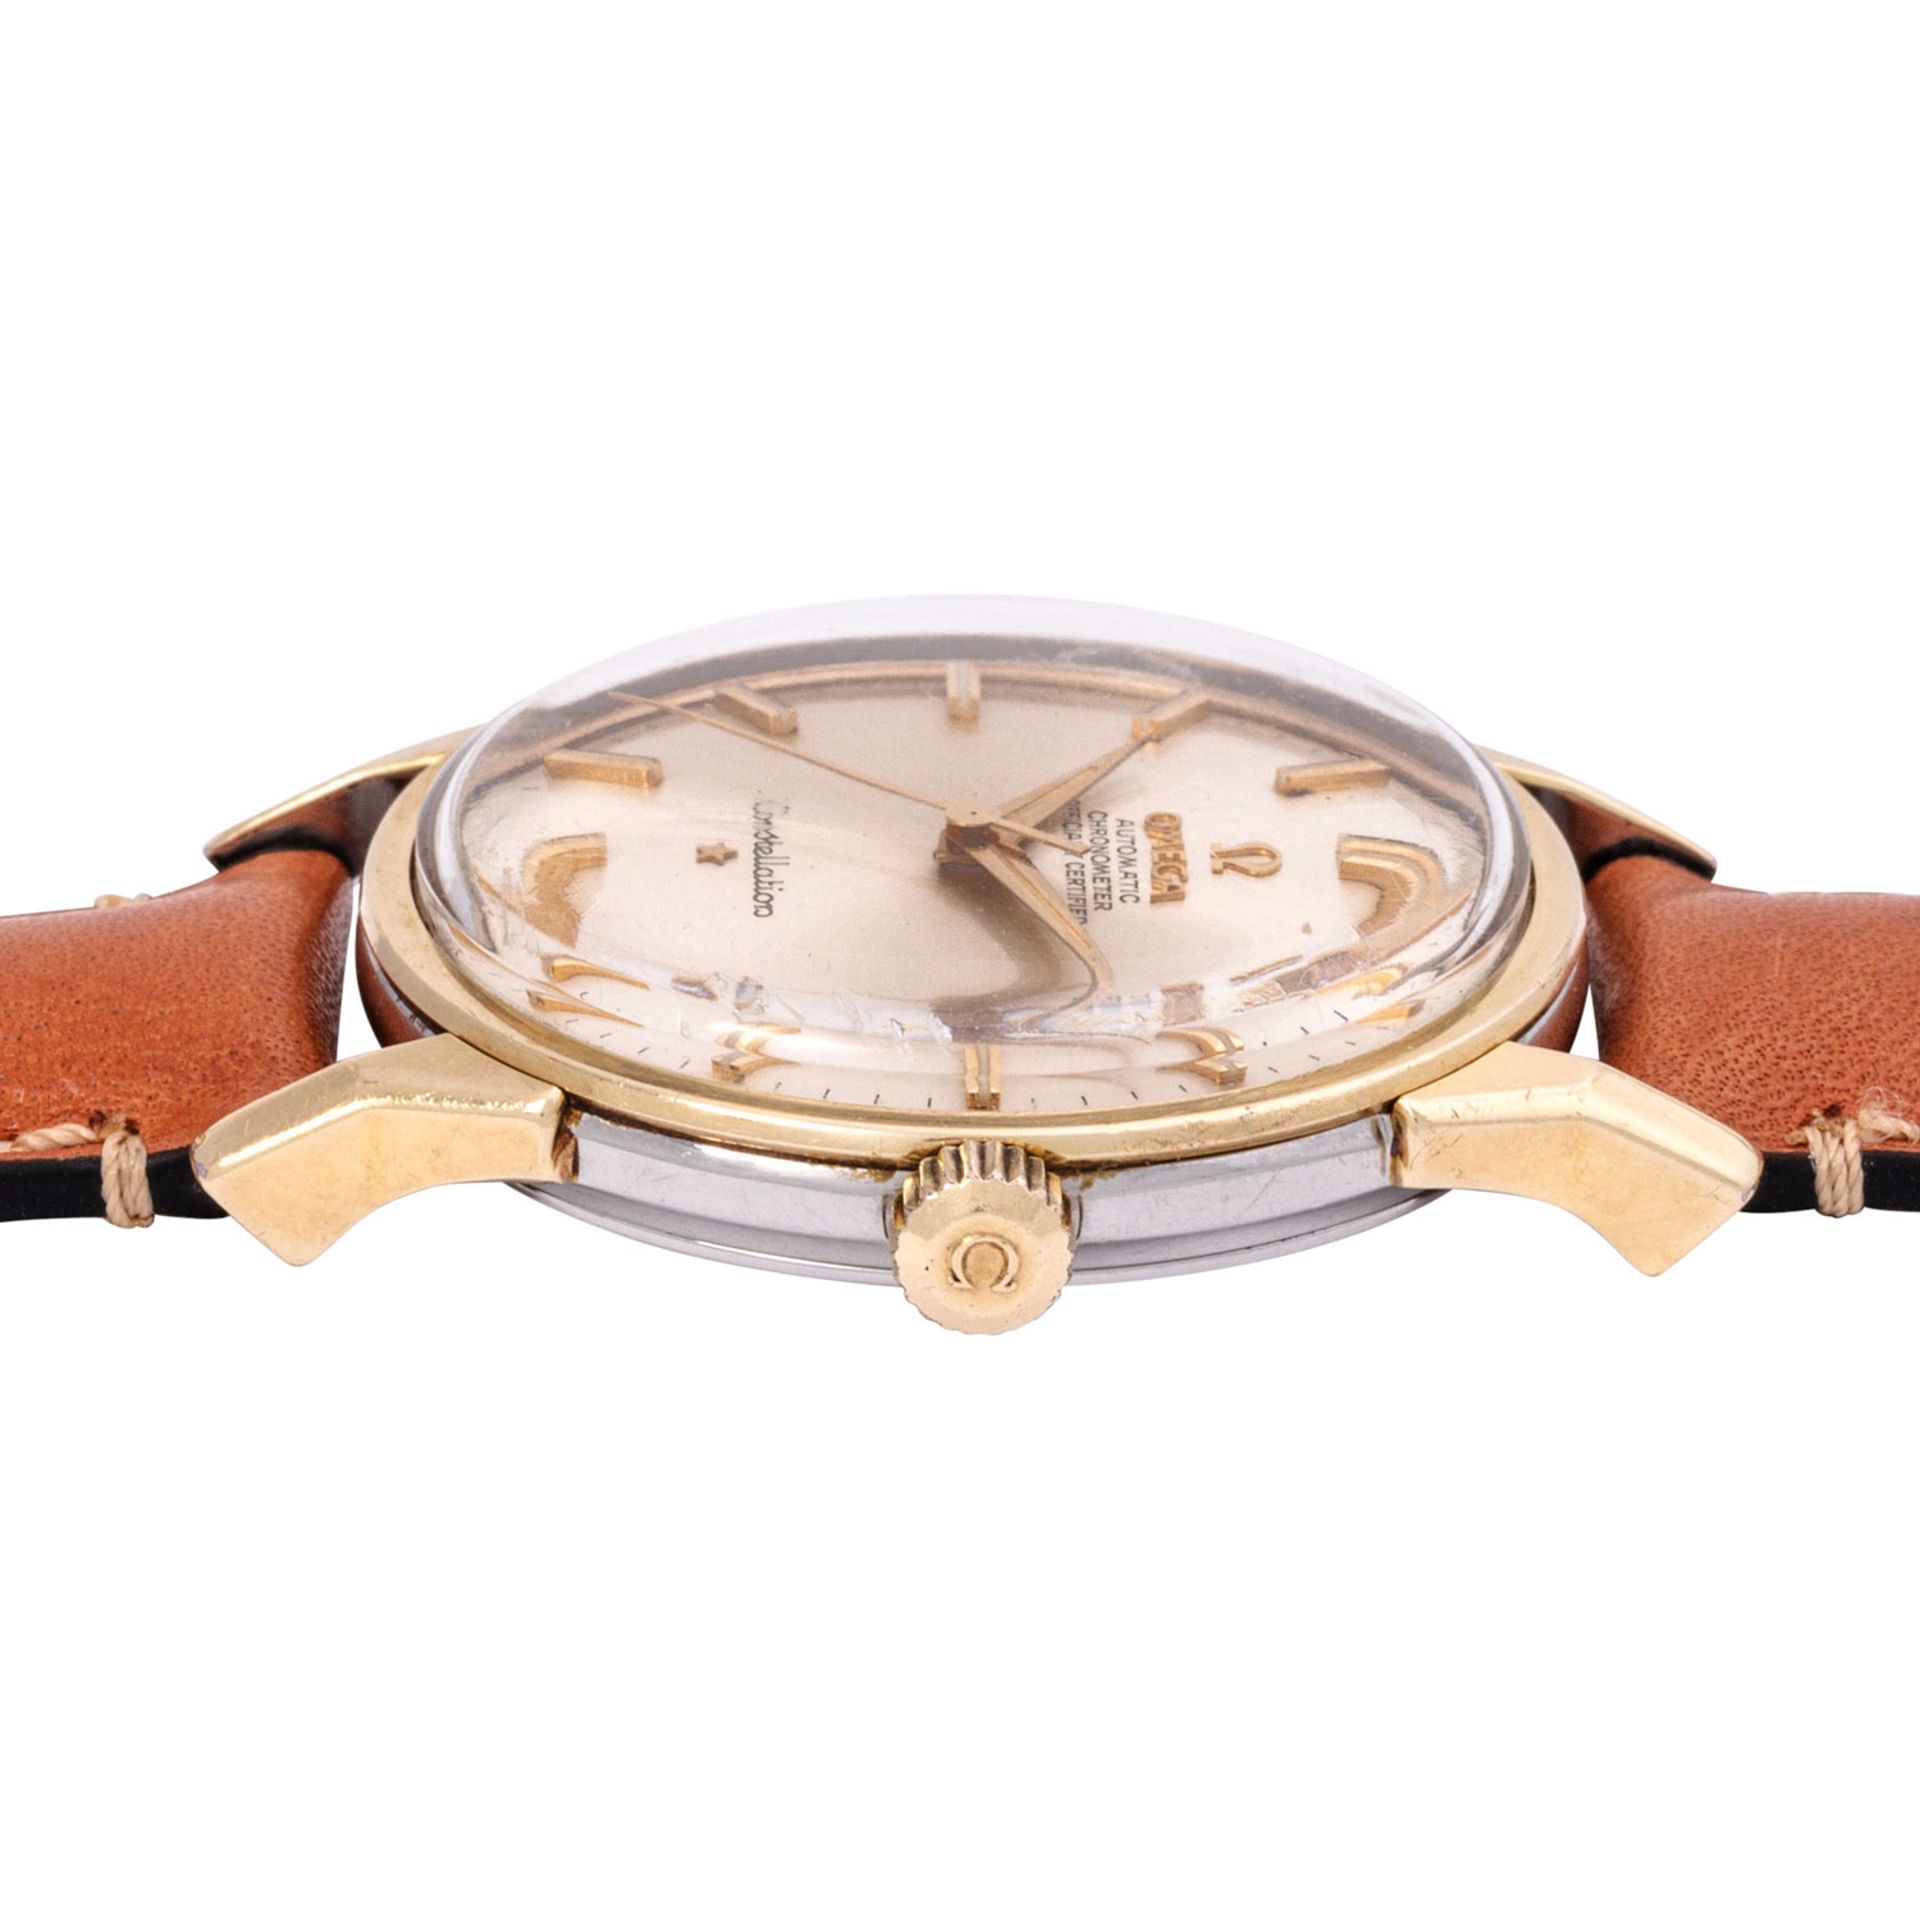 OMEGA Vintage Constellation Armbanduhr, Ref. 167.005. Ca. 1960er Jahre. - Bild 3 aus 7